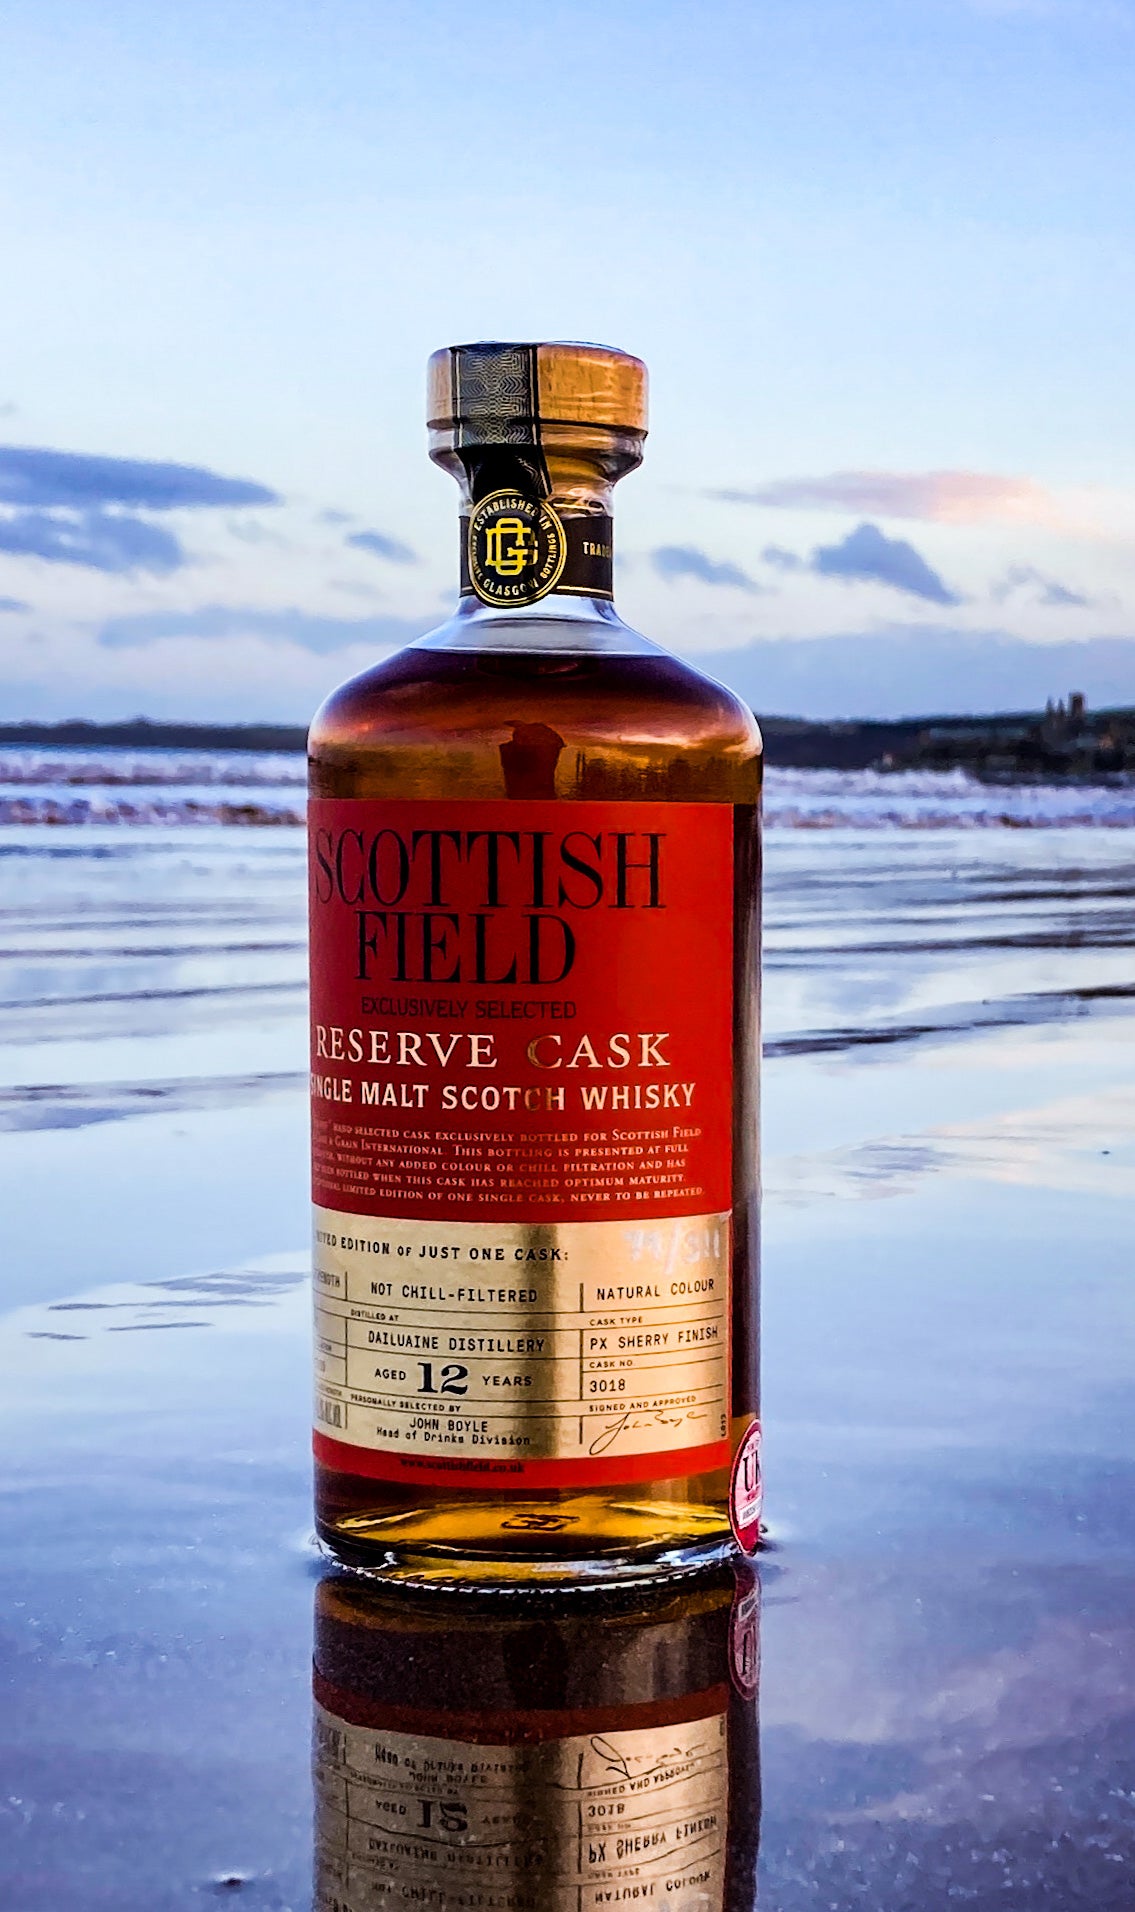 Scottish Field Reserve Cask Dailuaine 12 year old Single Malt Whisky